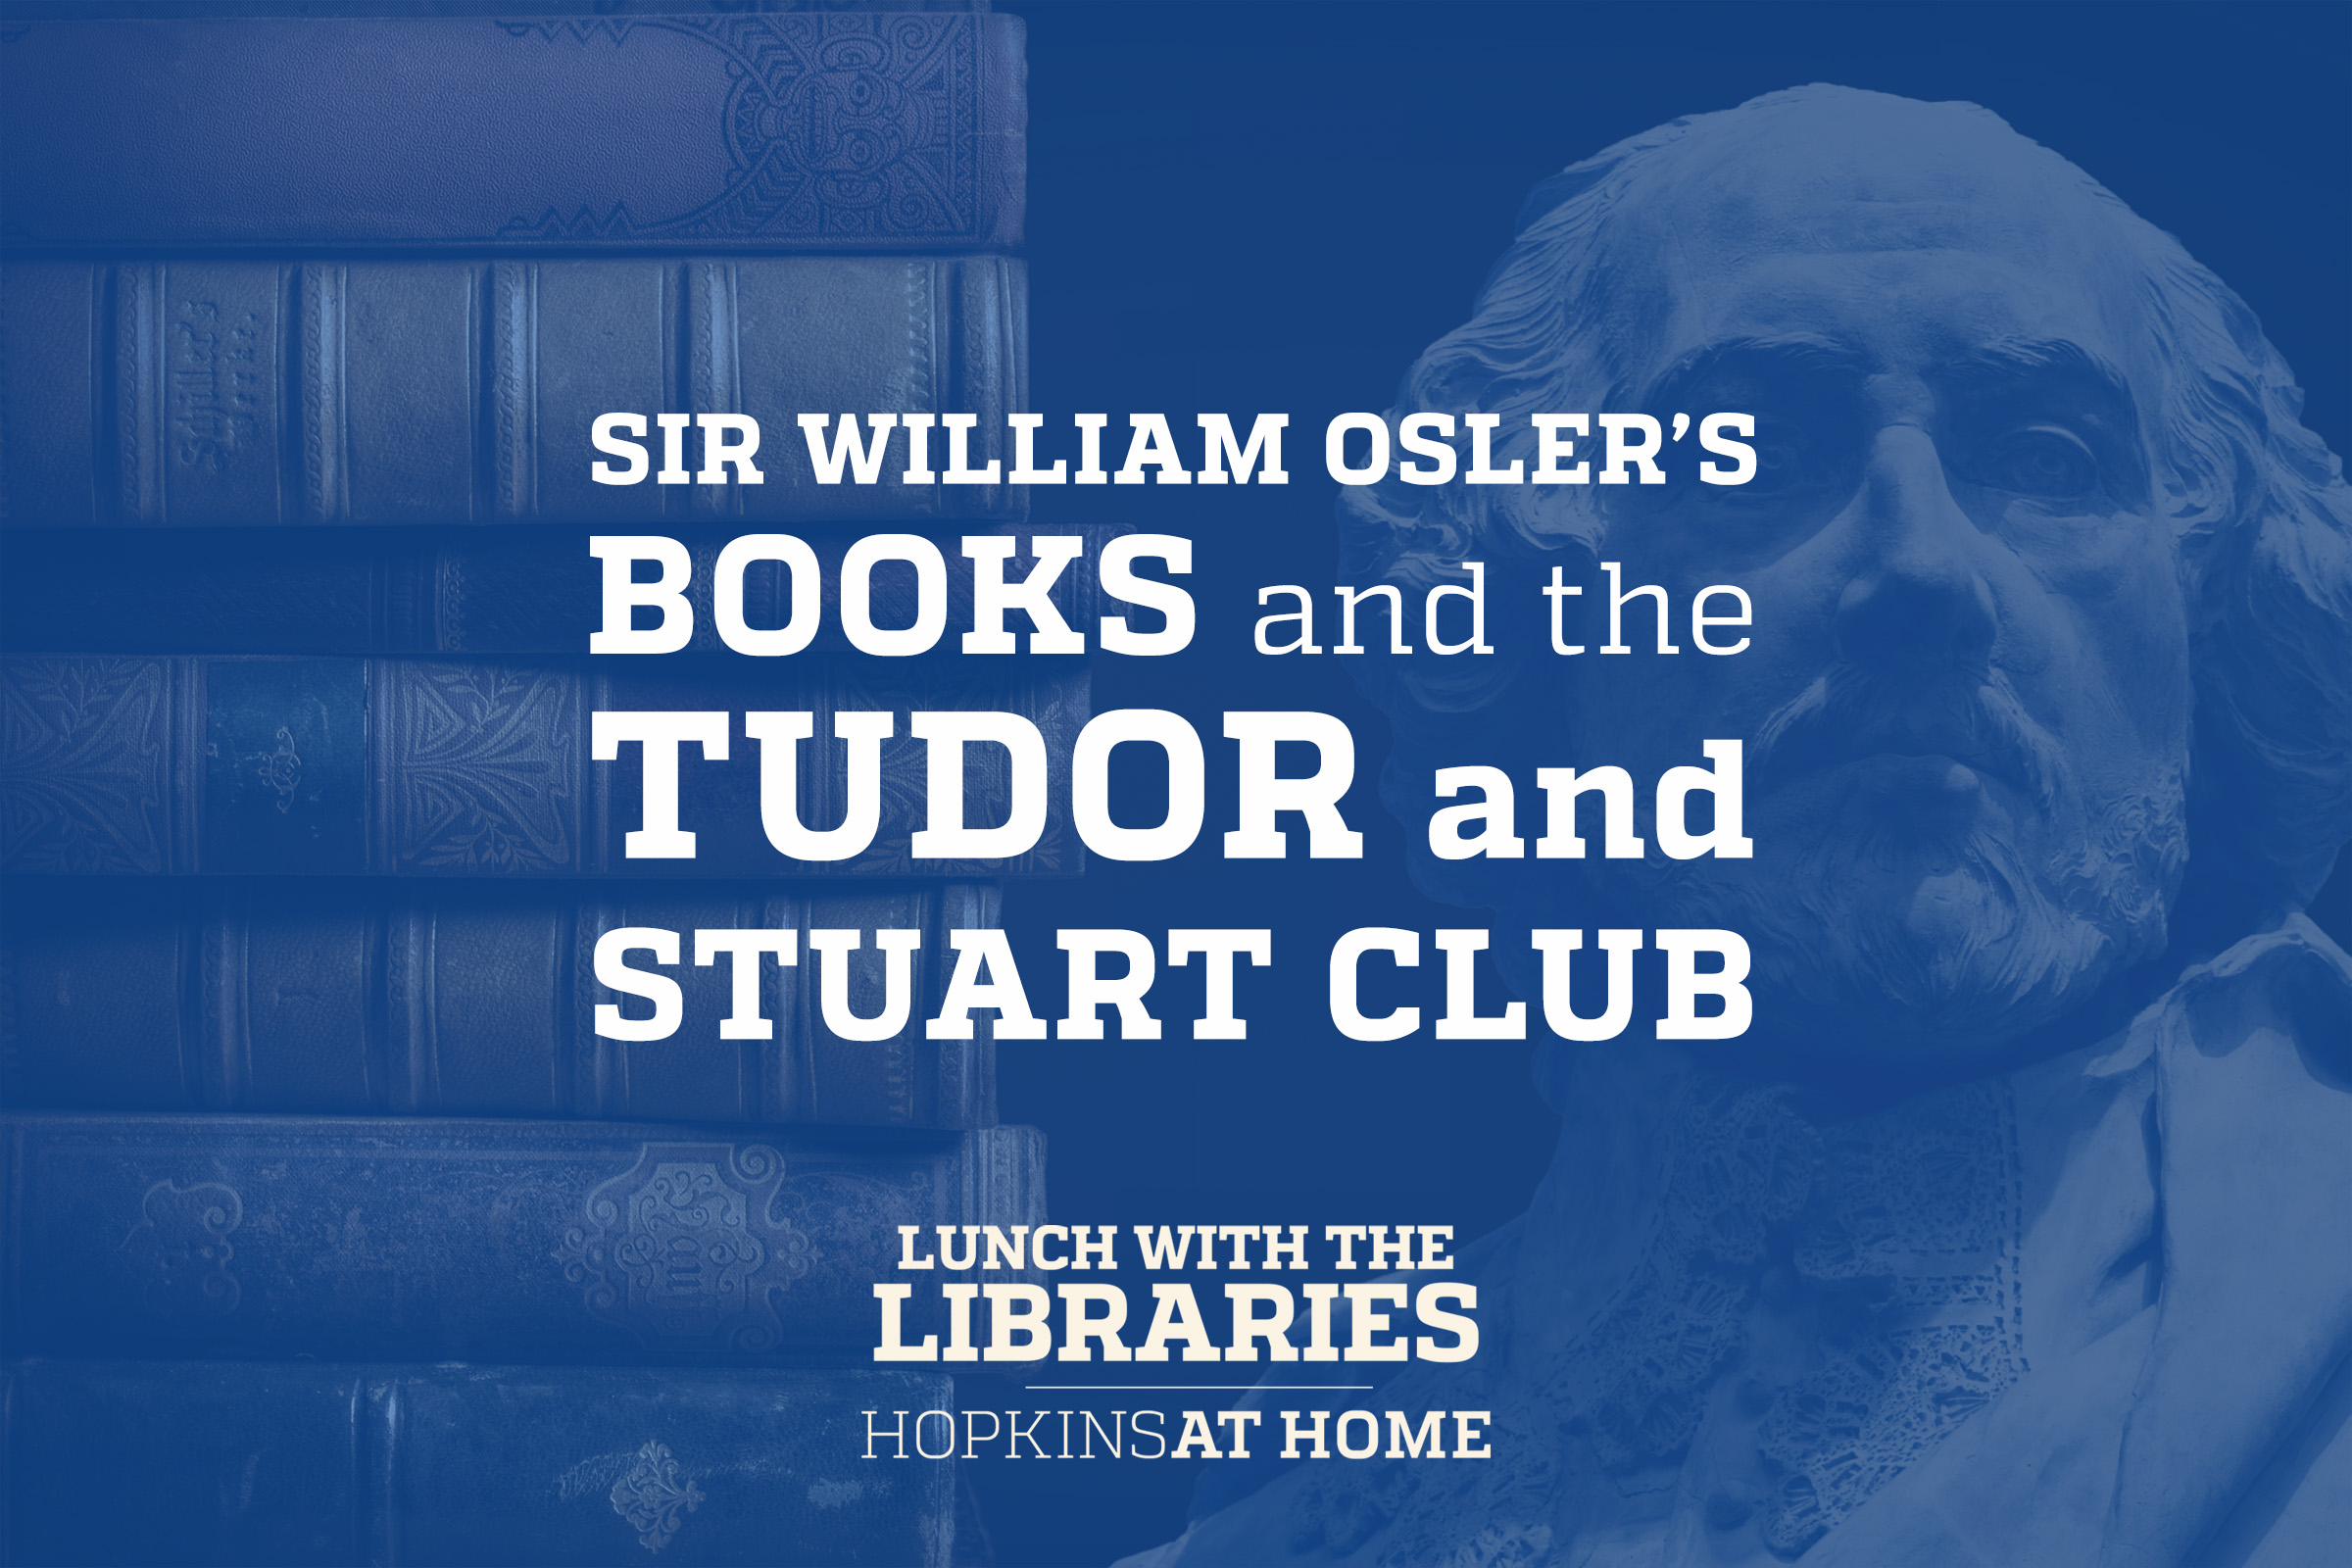 Sir William Osler's Books and the Tudor and Stuart Club